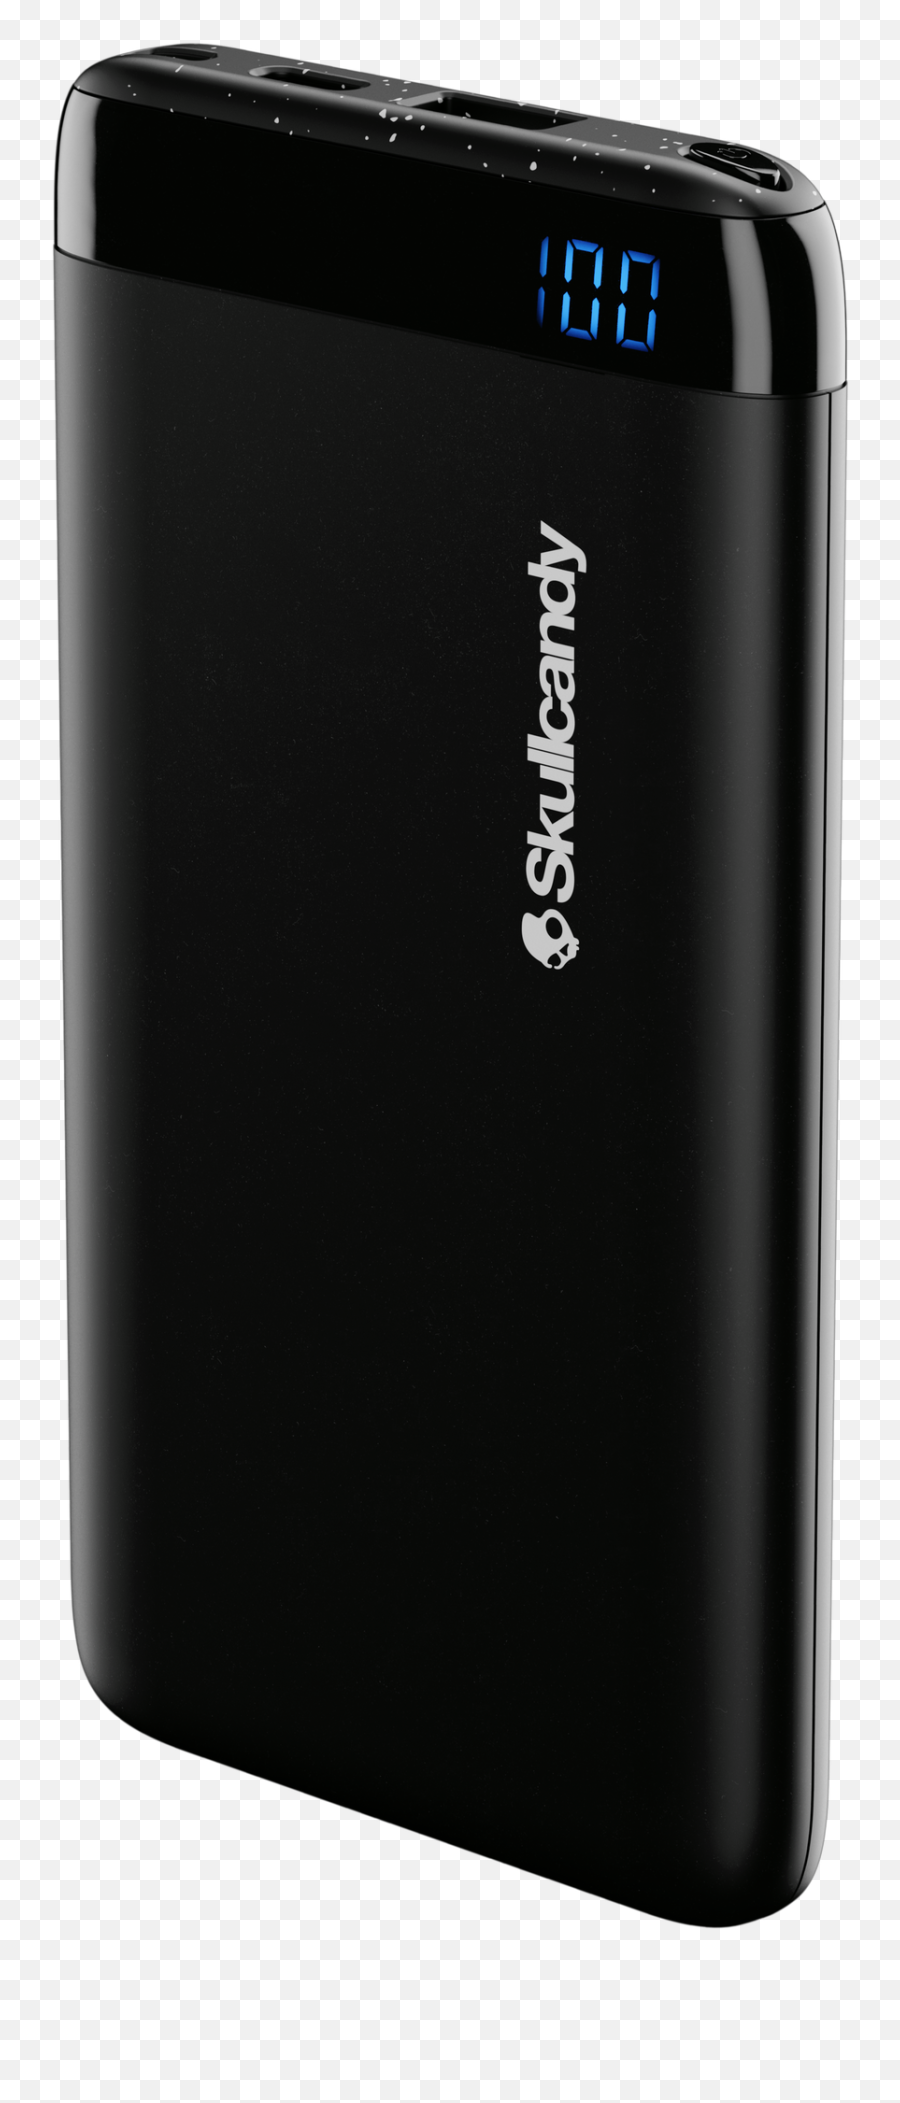 Skullcandy Stash 6000 Mah Portable Battery Pack Ebay - Samsung Group Png,Skullcandy Icon 2